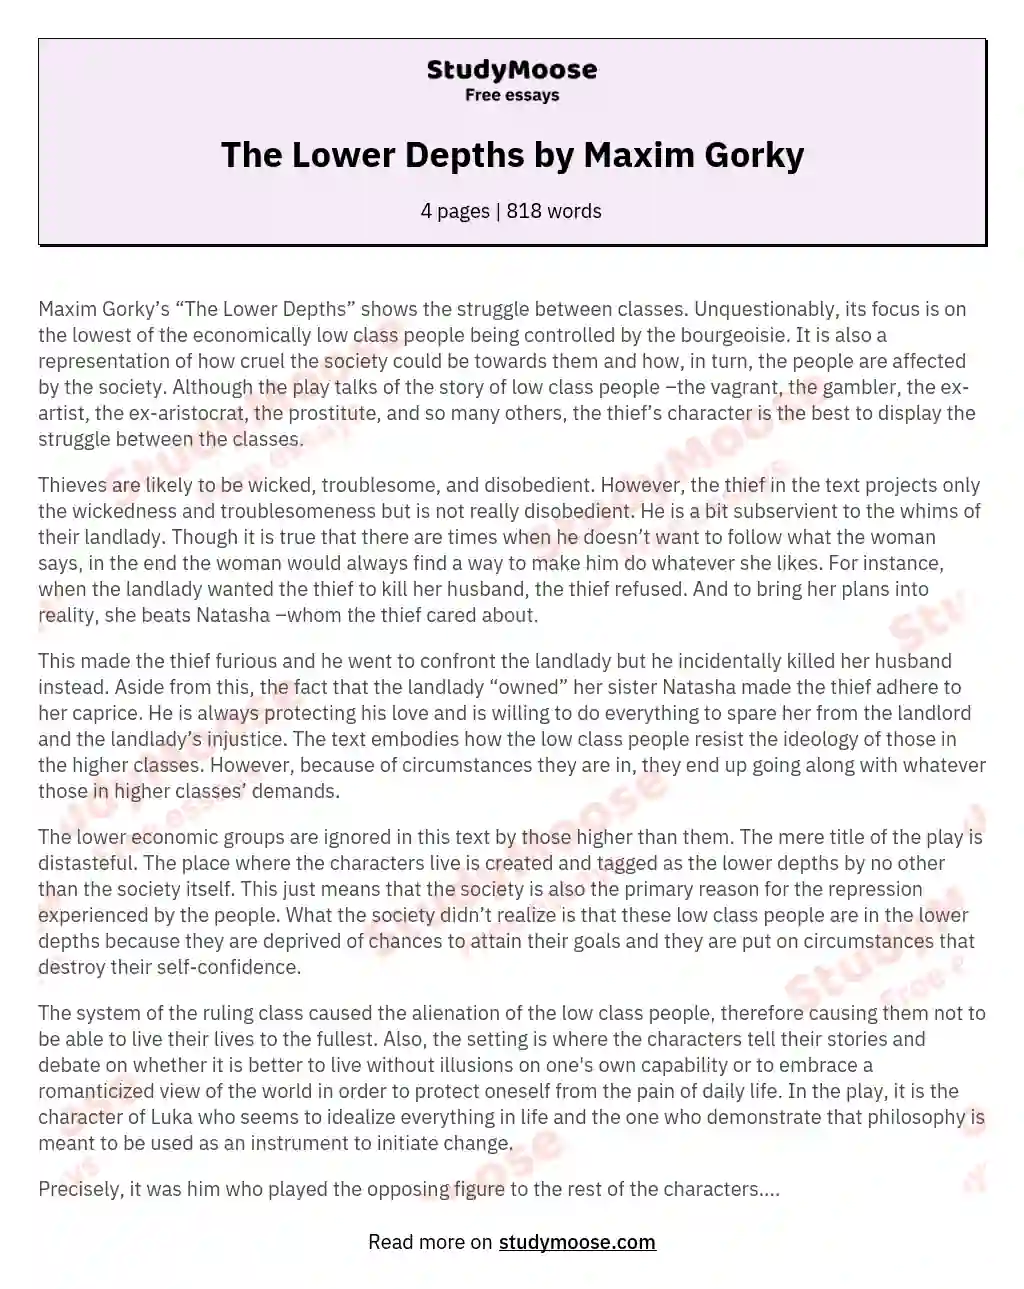 The Lower Depths by Maxim Gorky essay